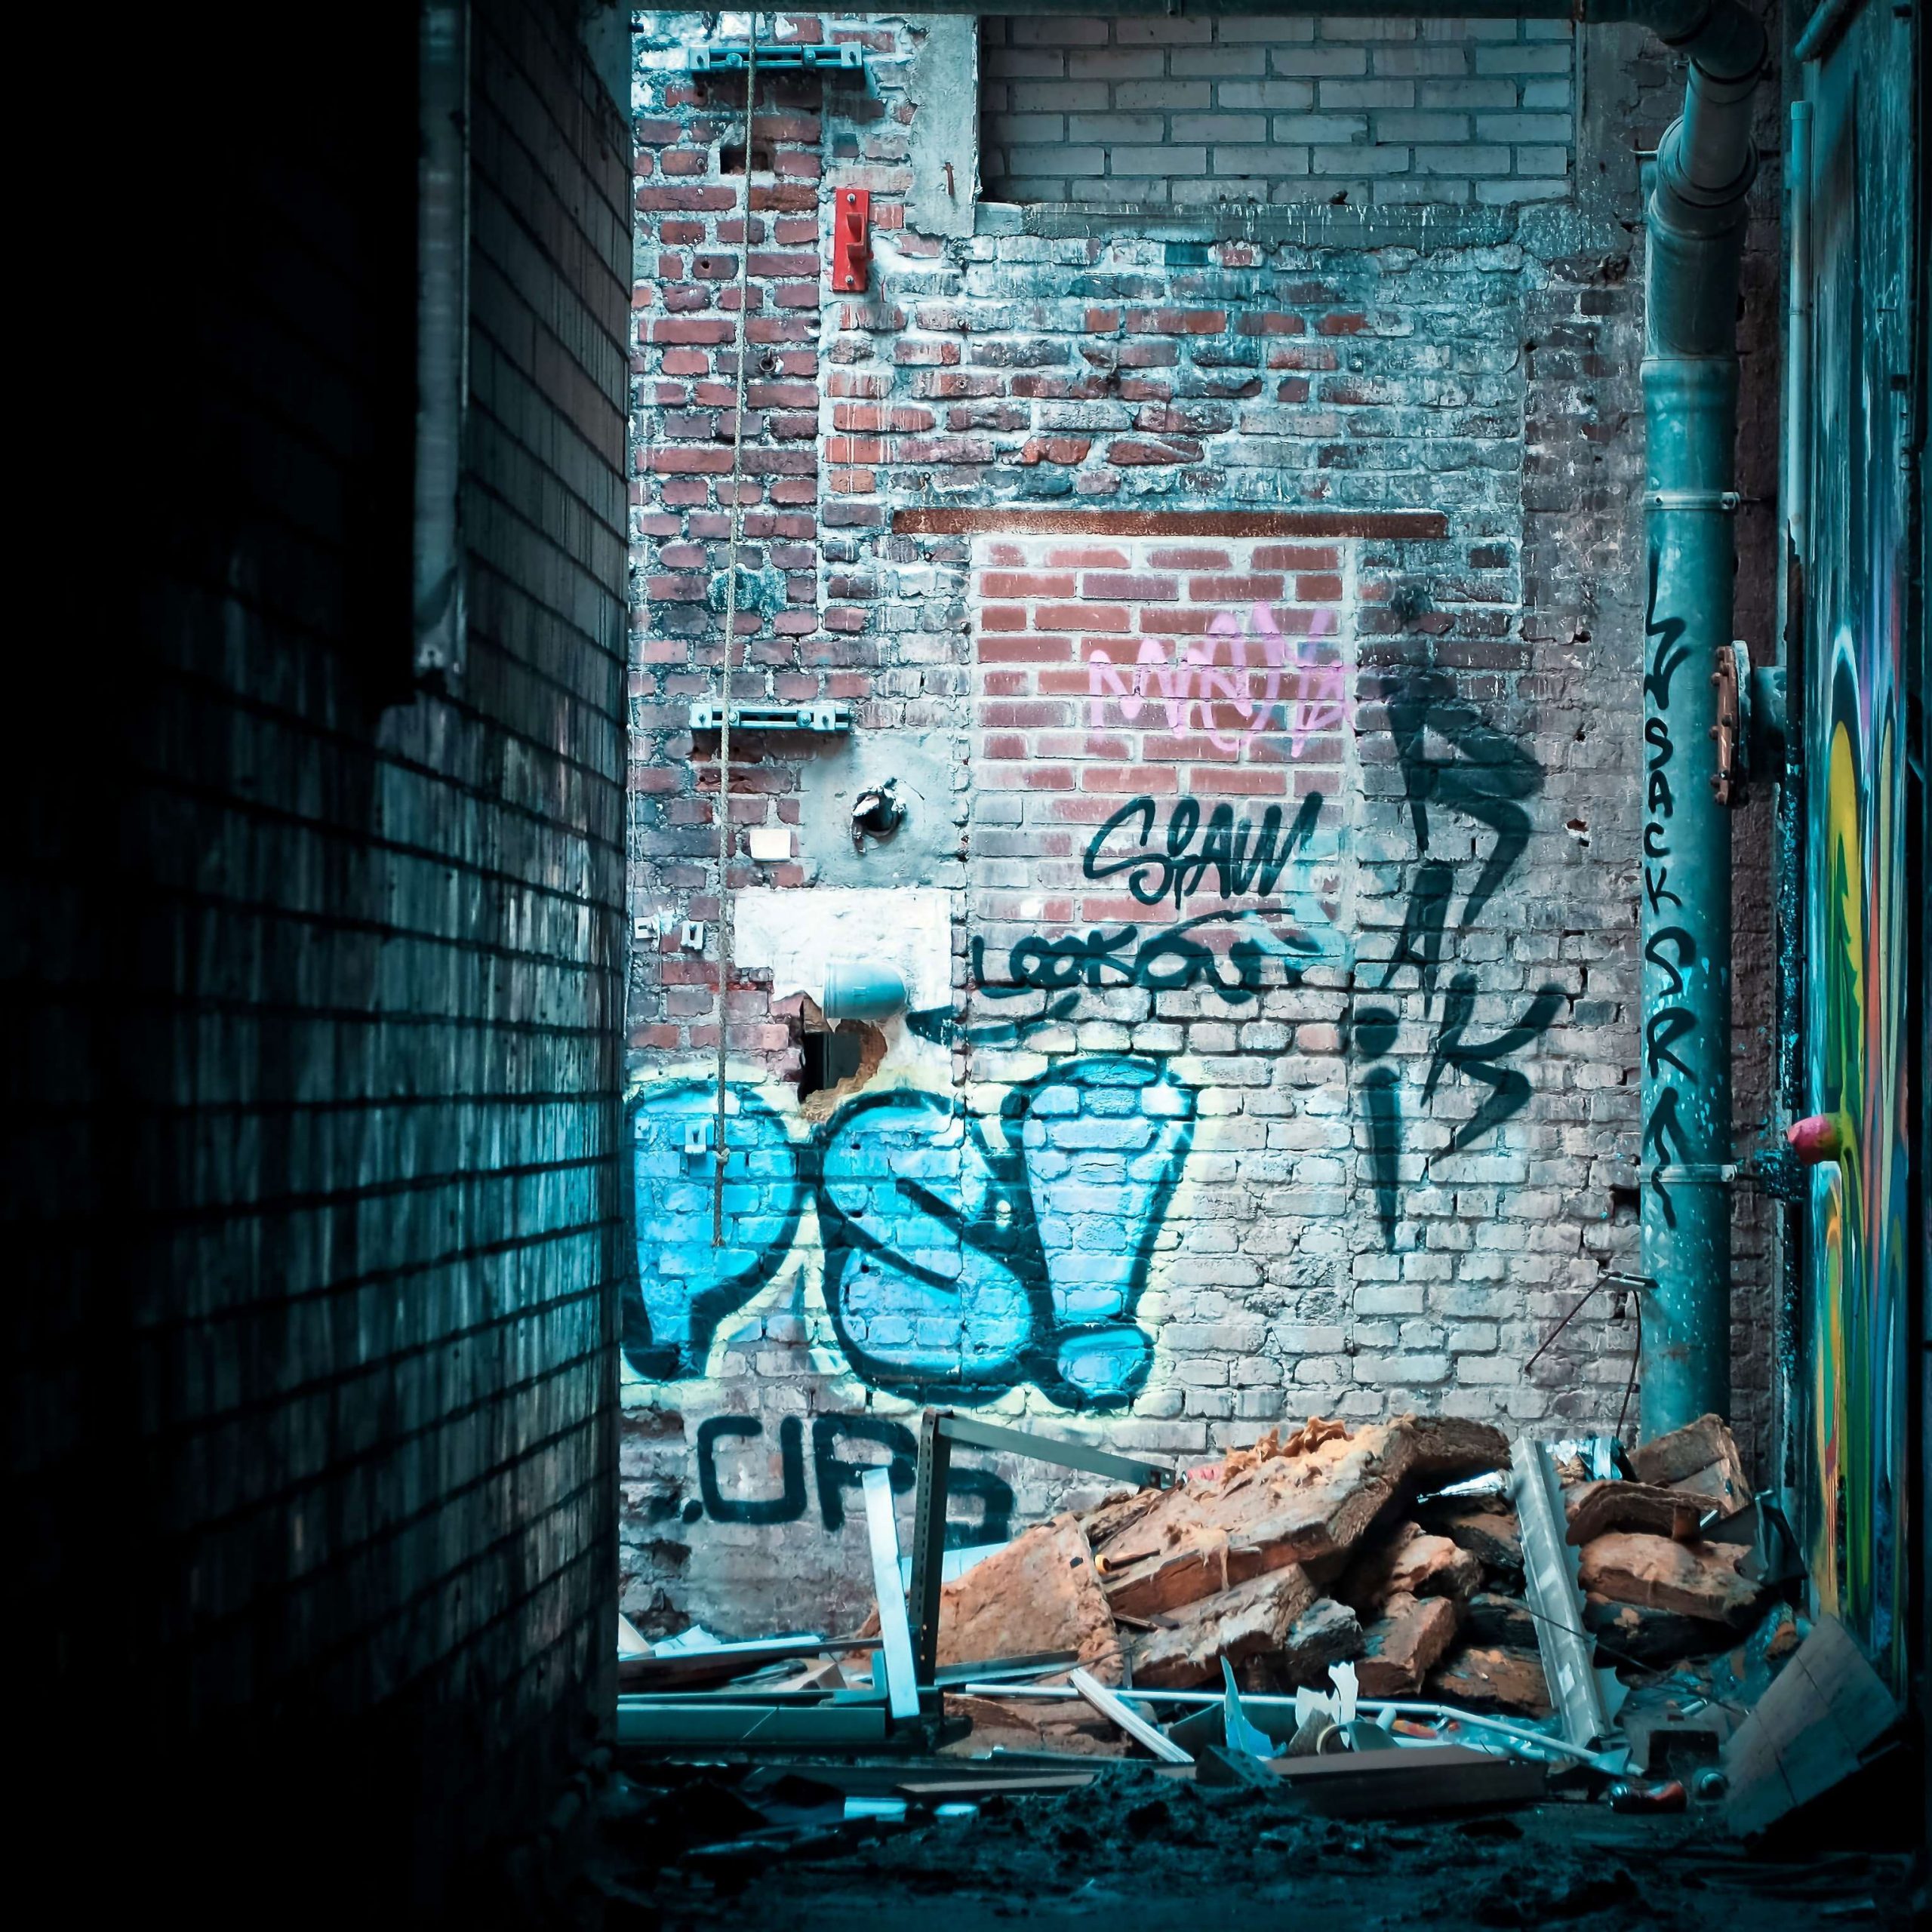 Abandoned wallpaper, art, brick wall, broken, dilapidated, dirty, ghetto